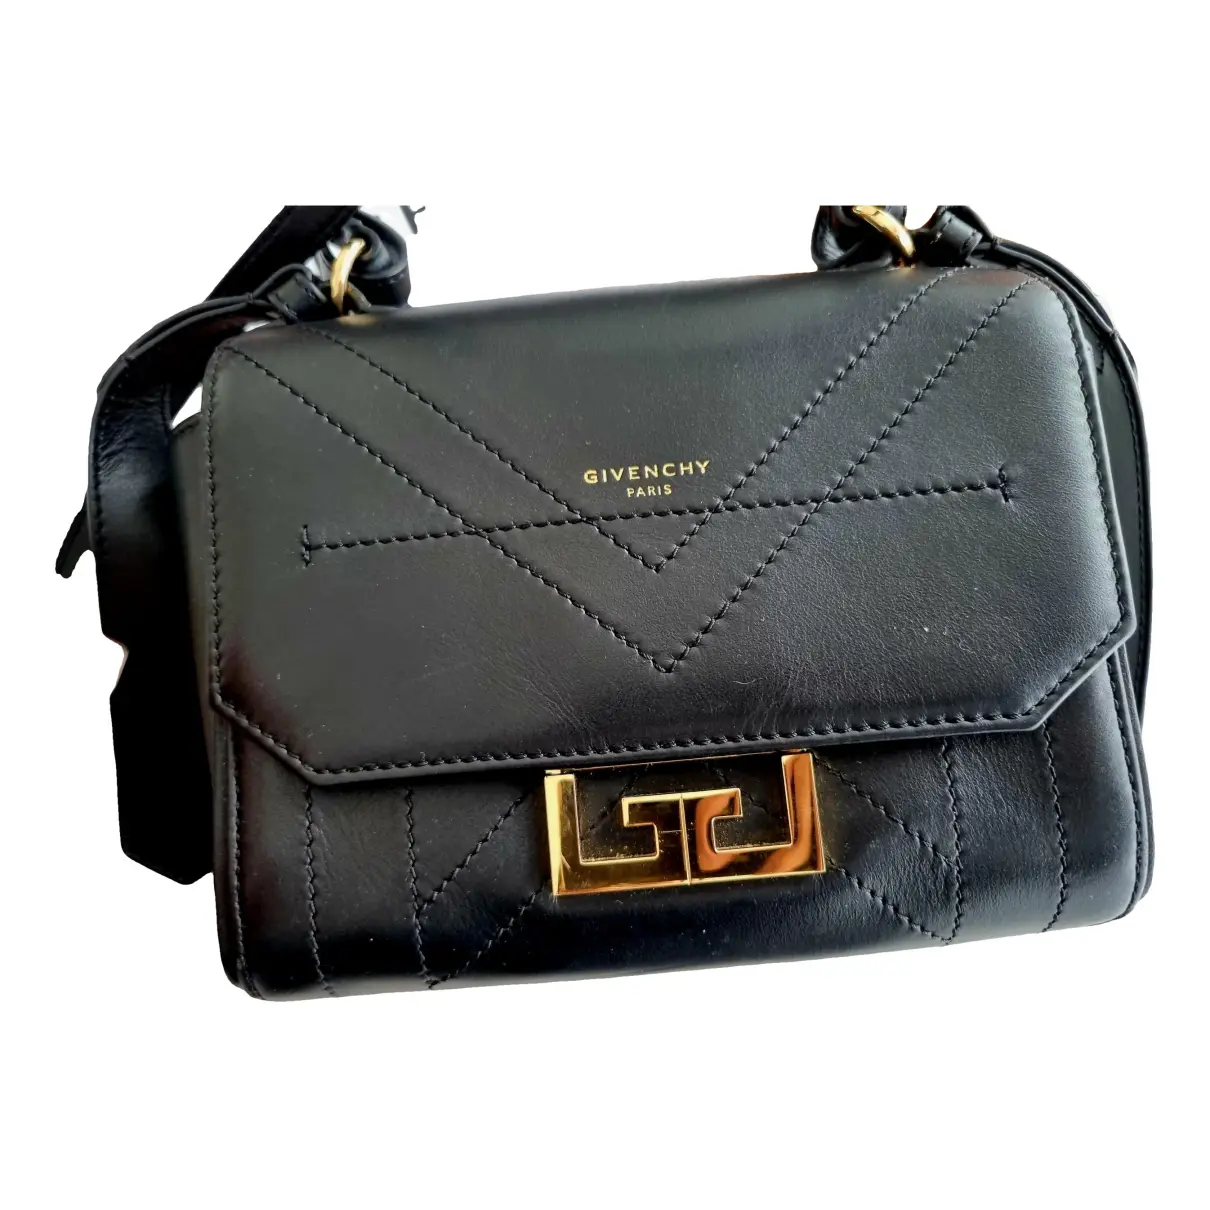 Eden leather handbag